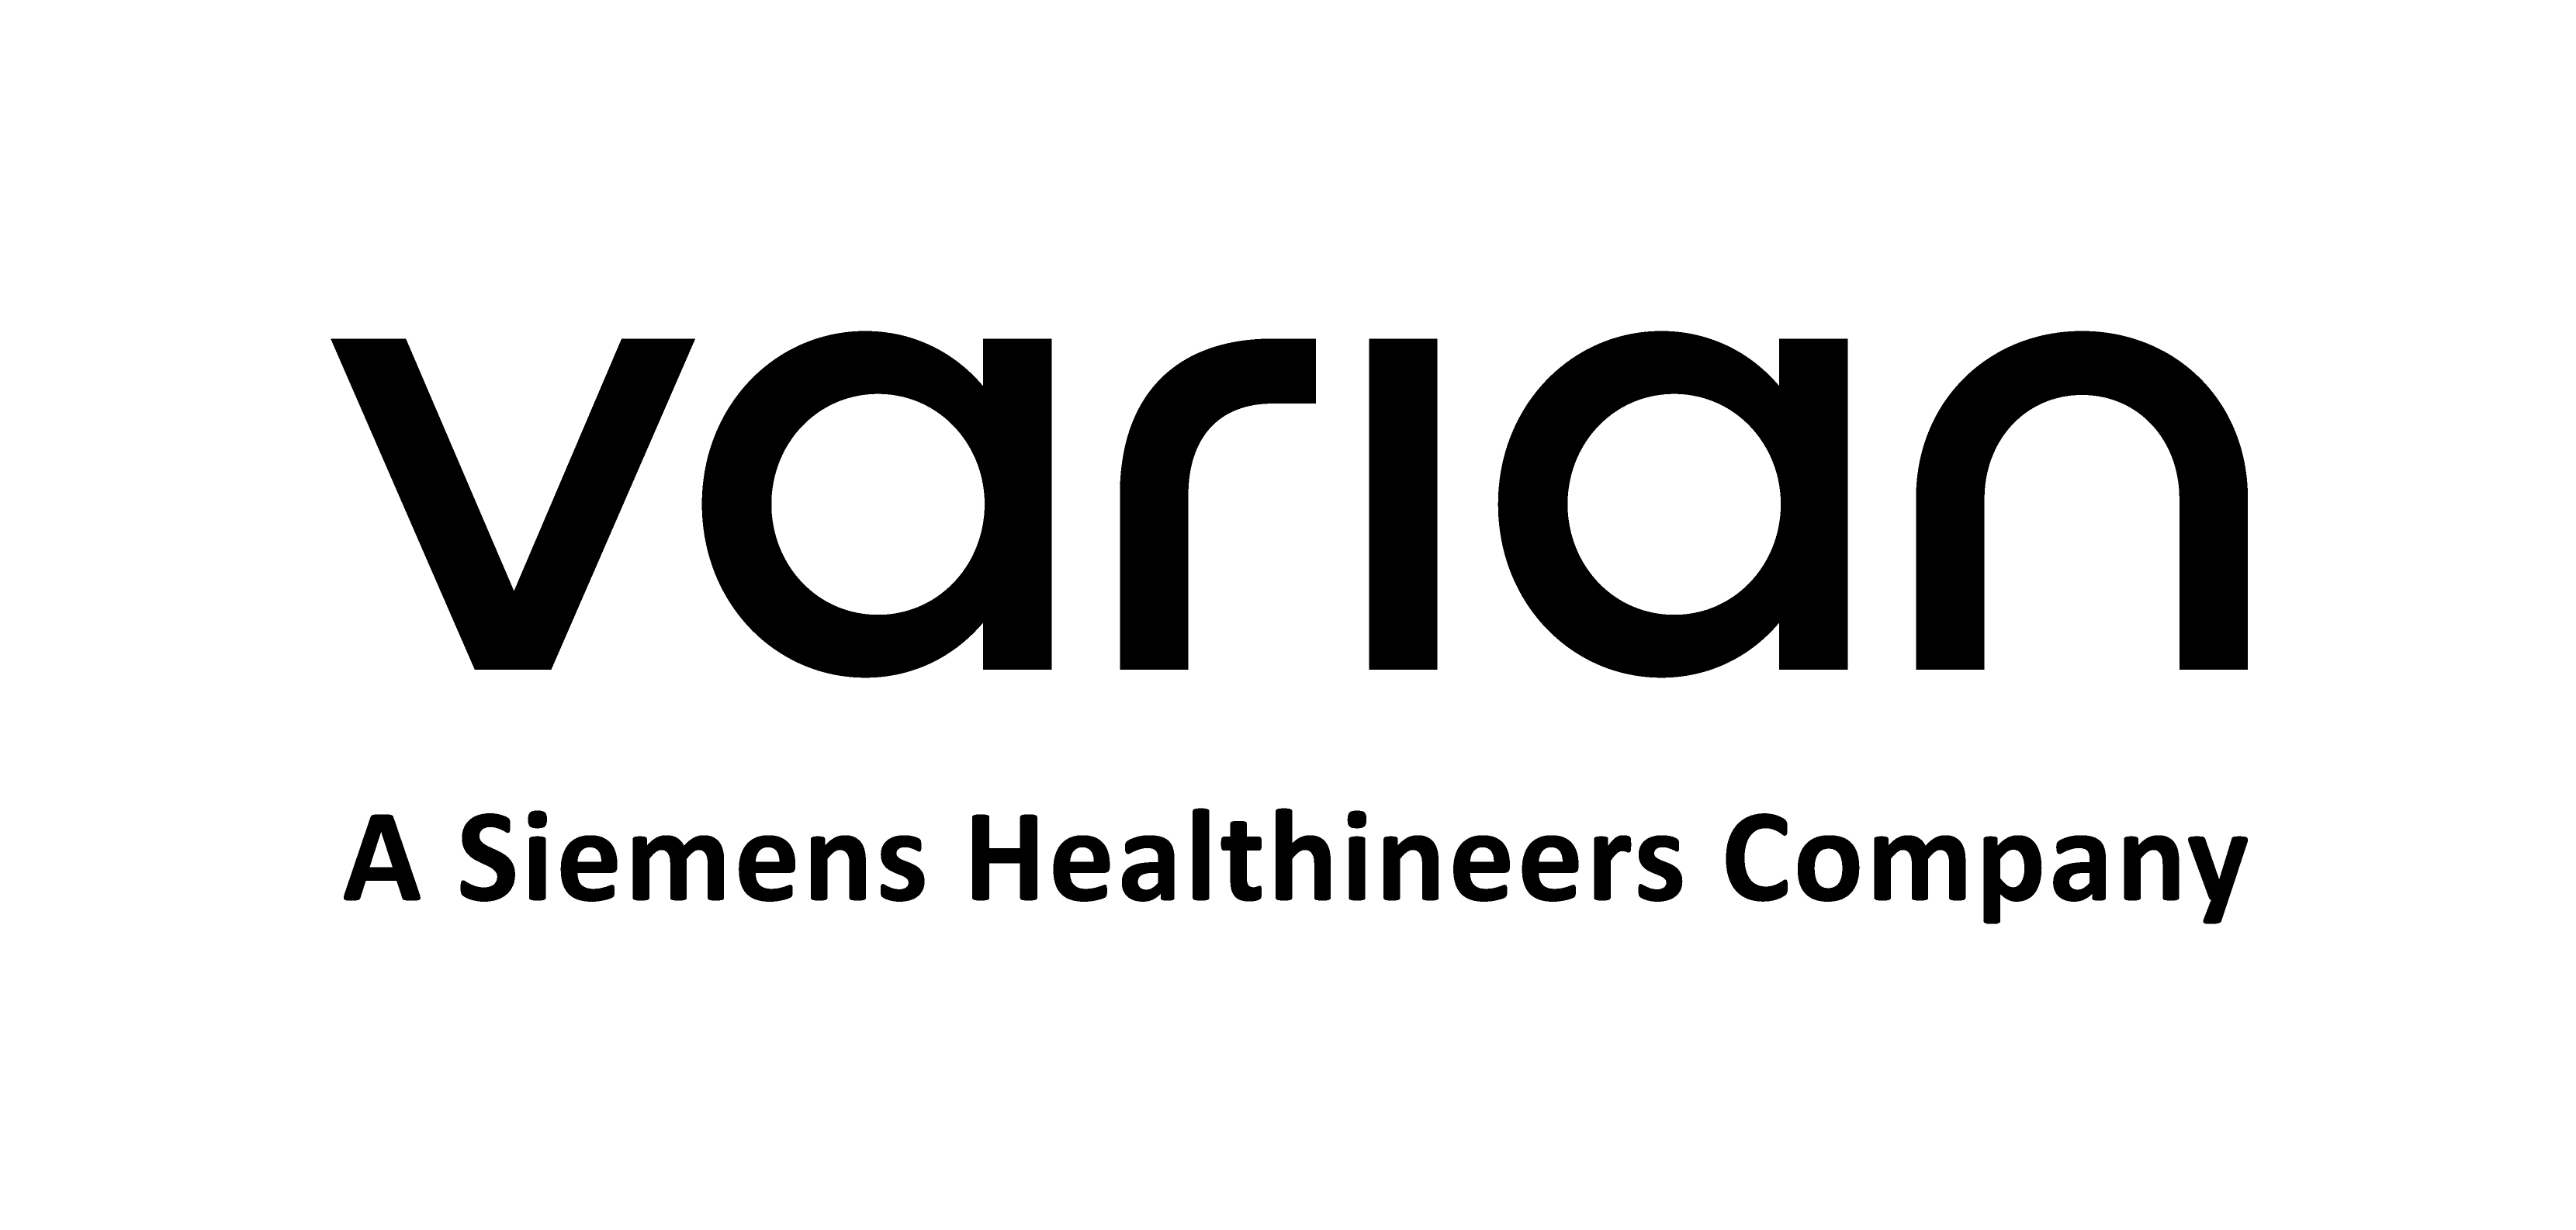 Varian, A Siemens Healthineer Company